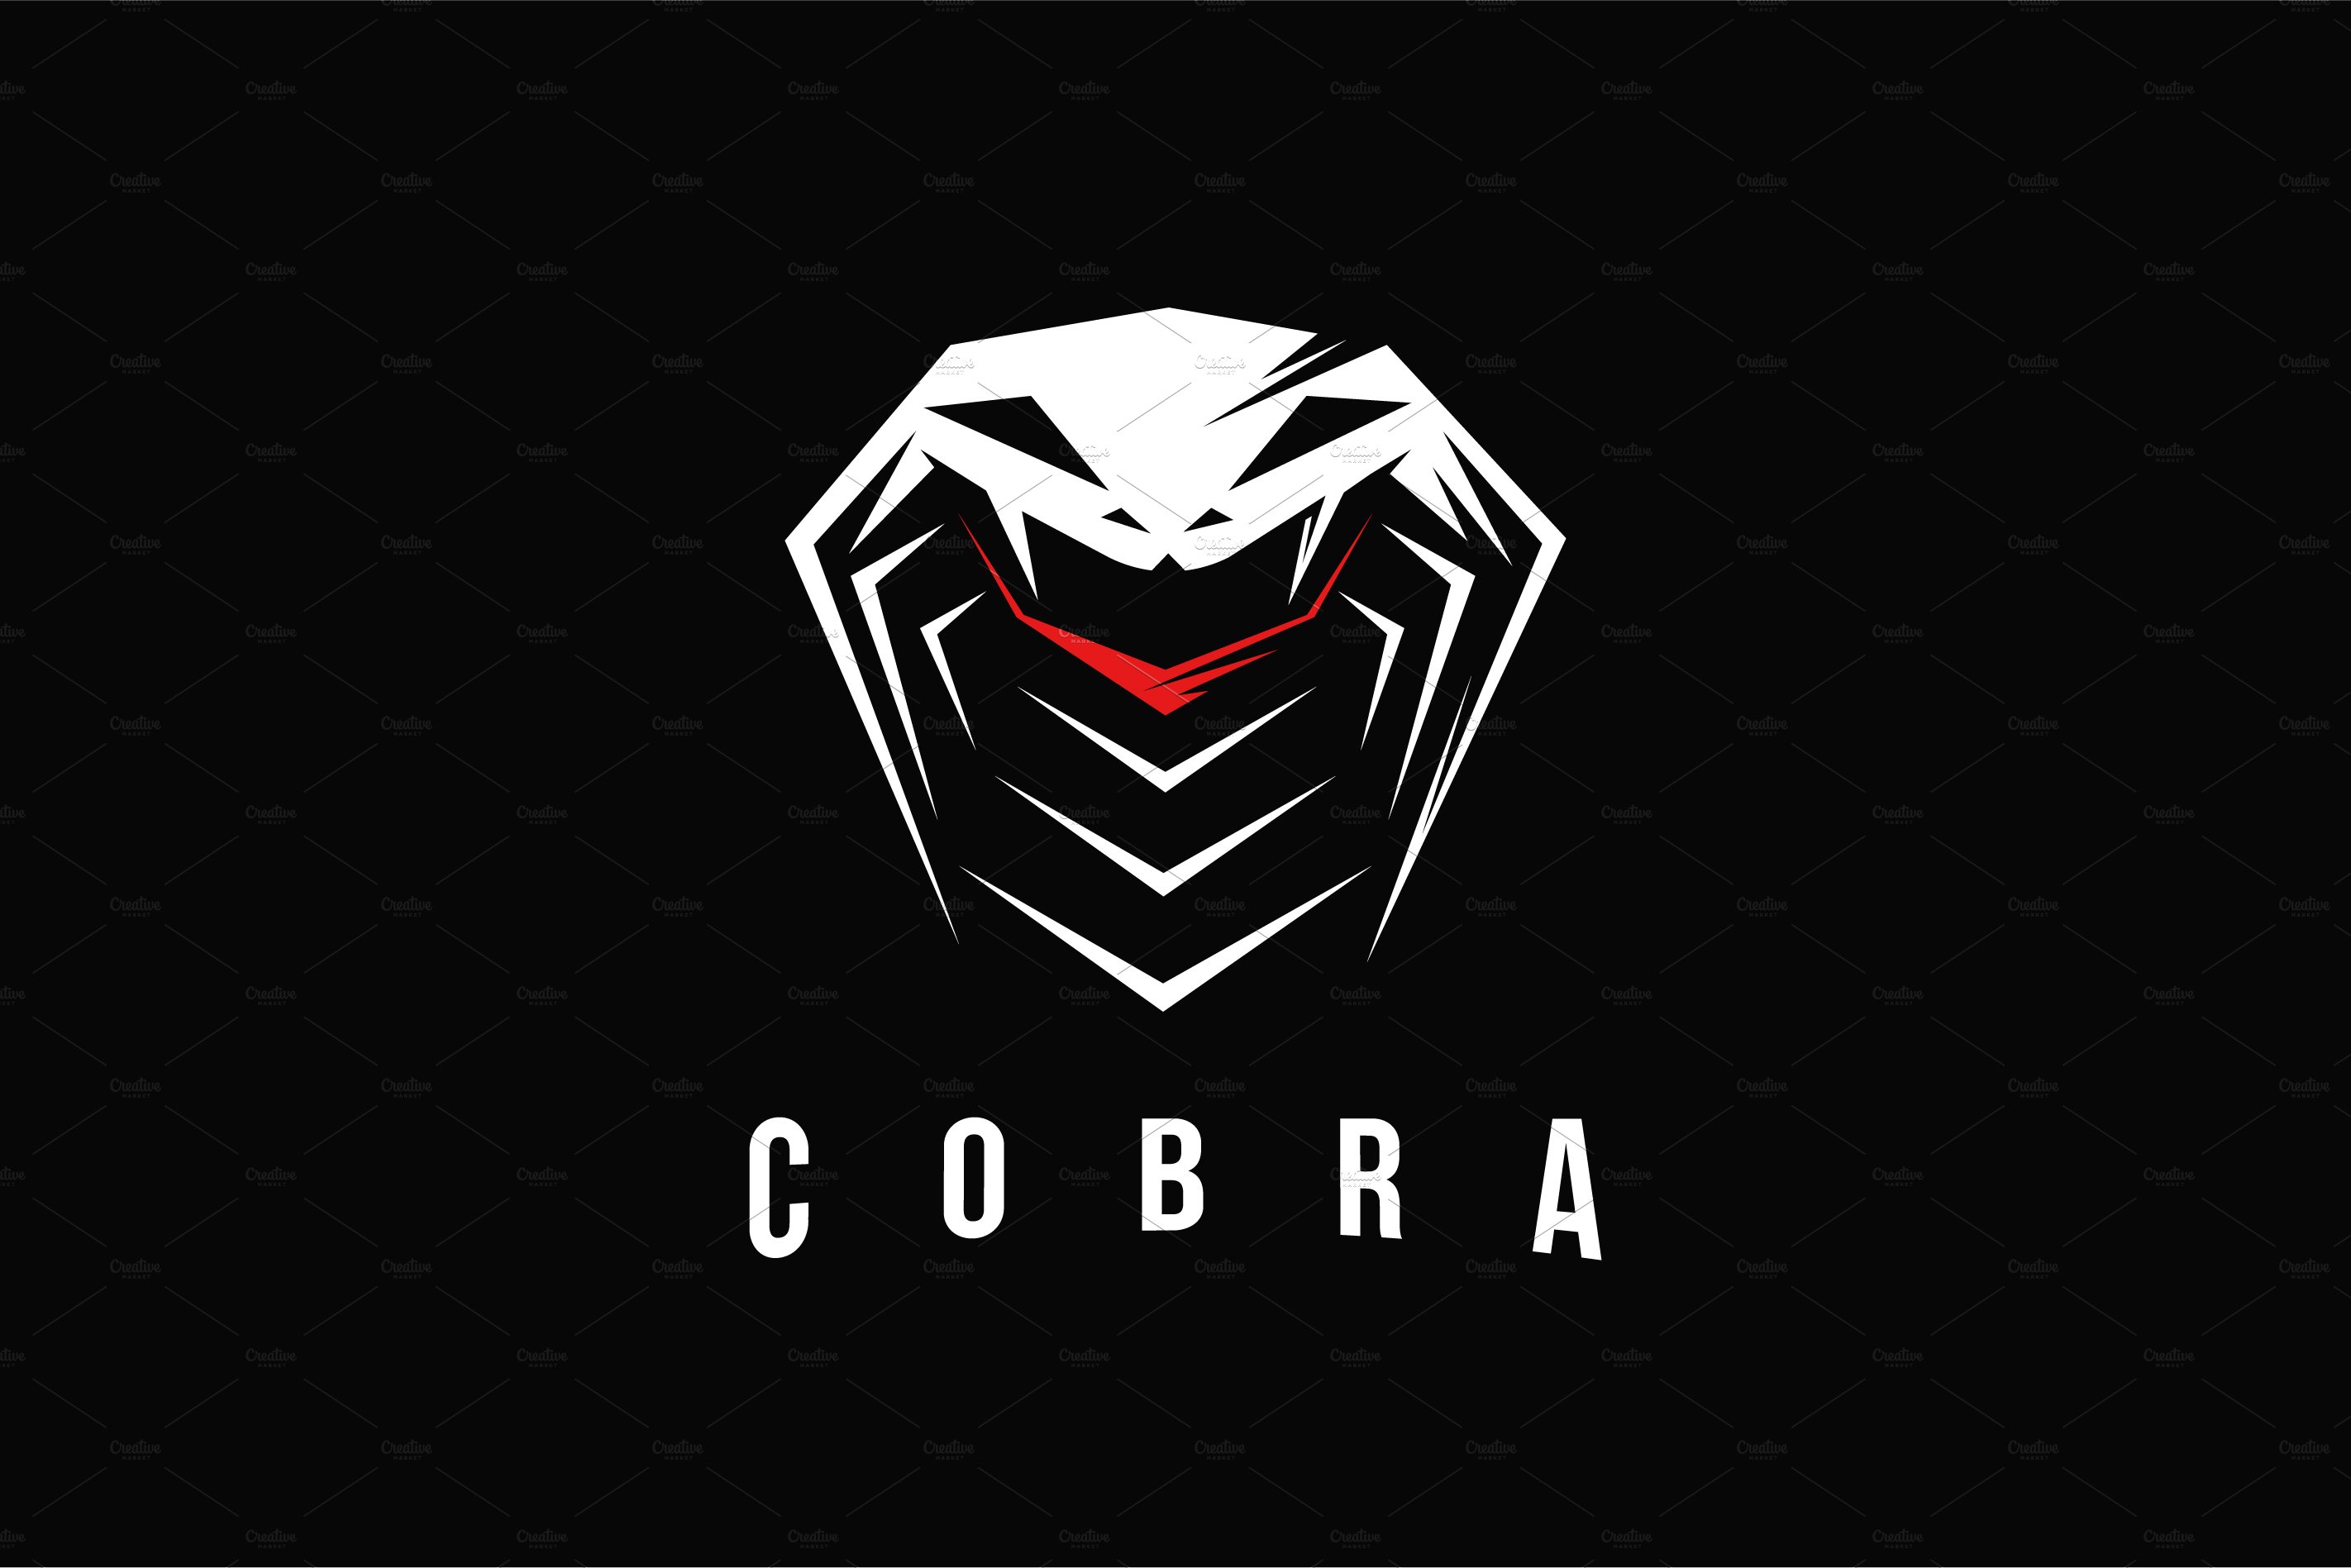 Black king cobra logo design usable for business Vector Image